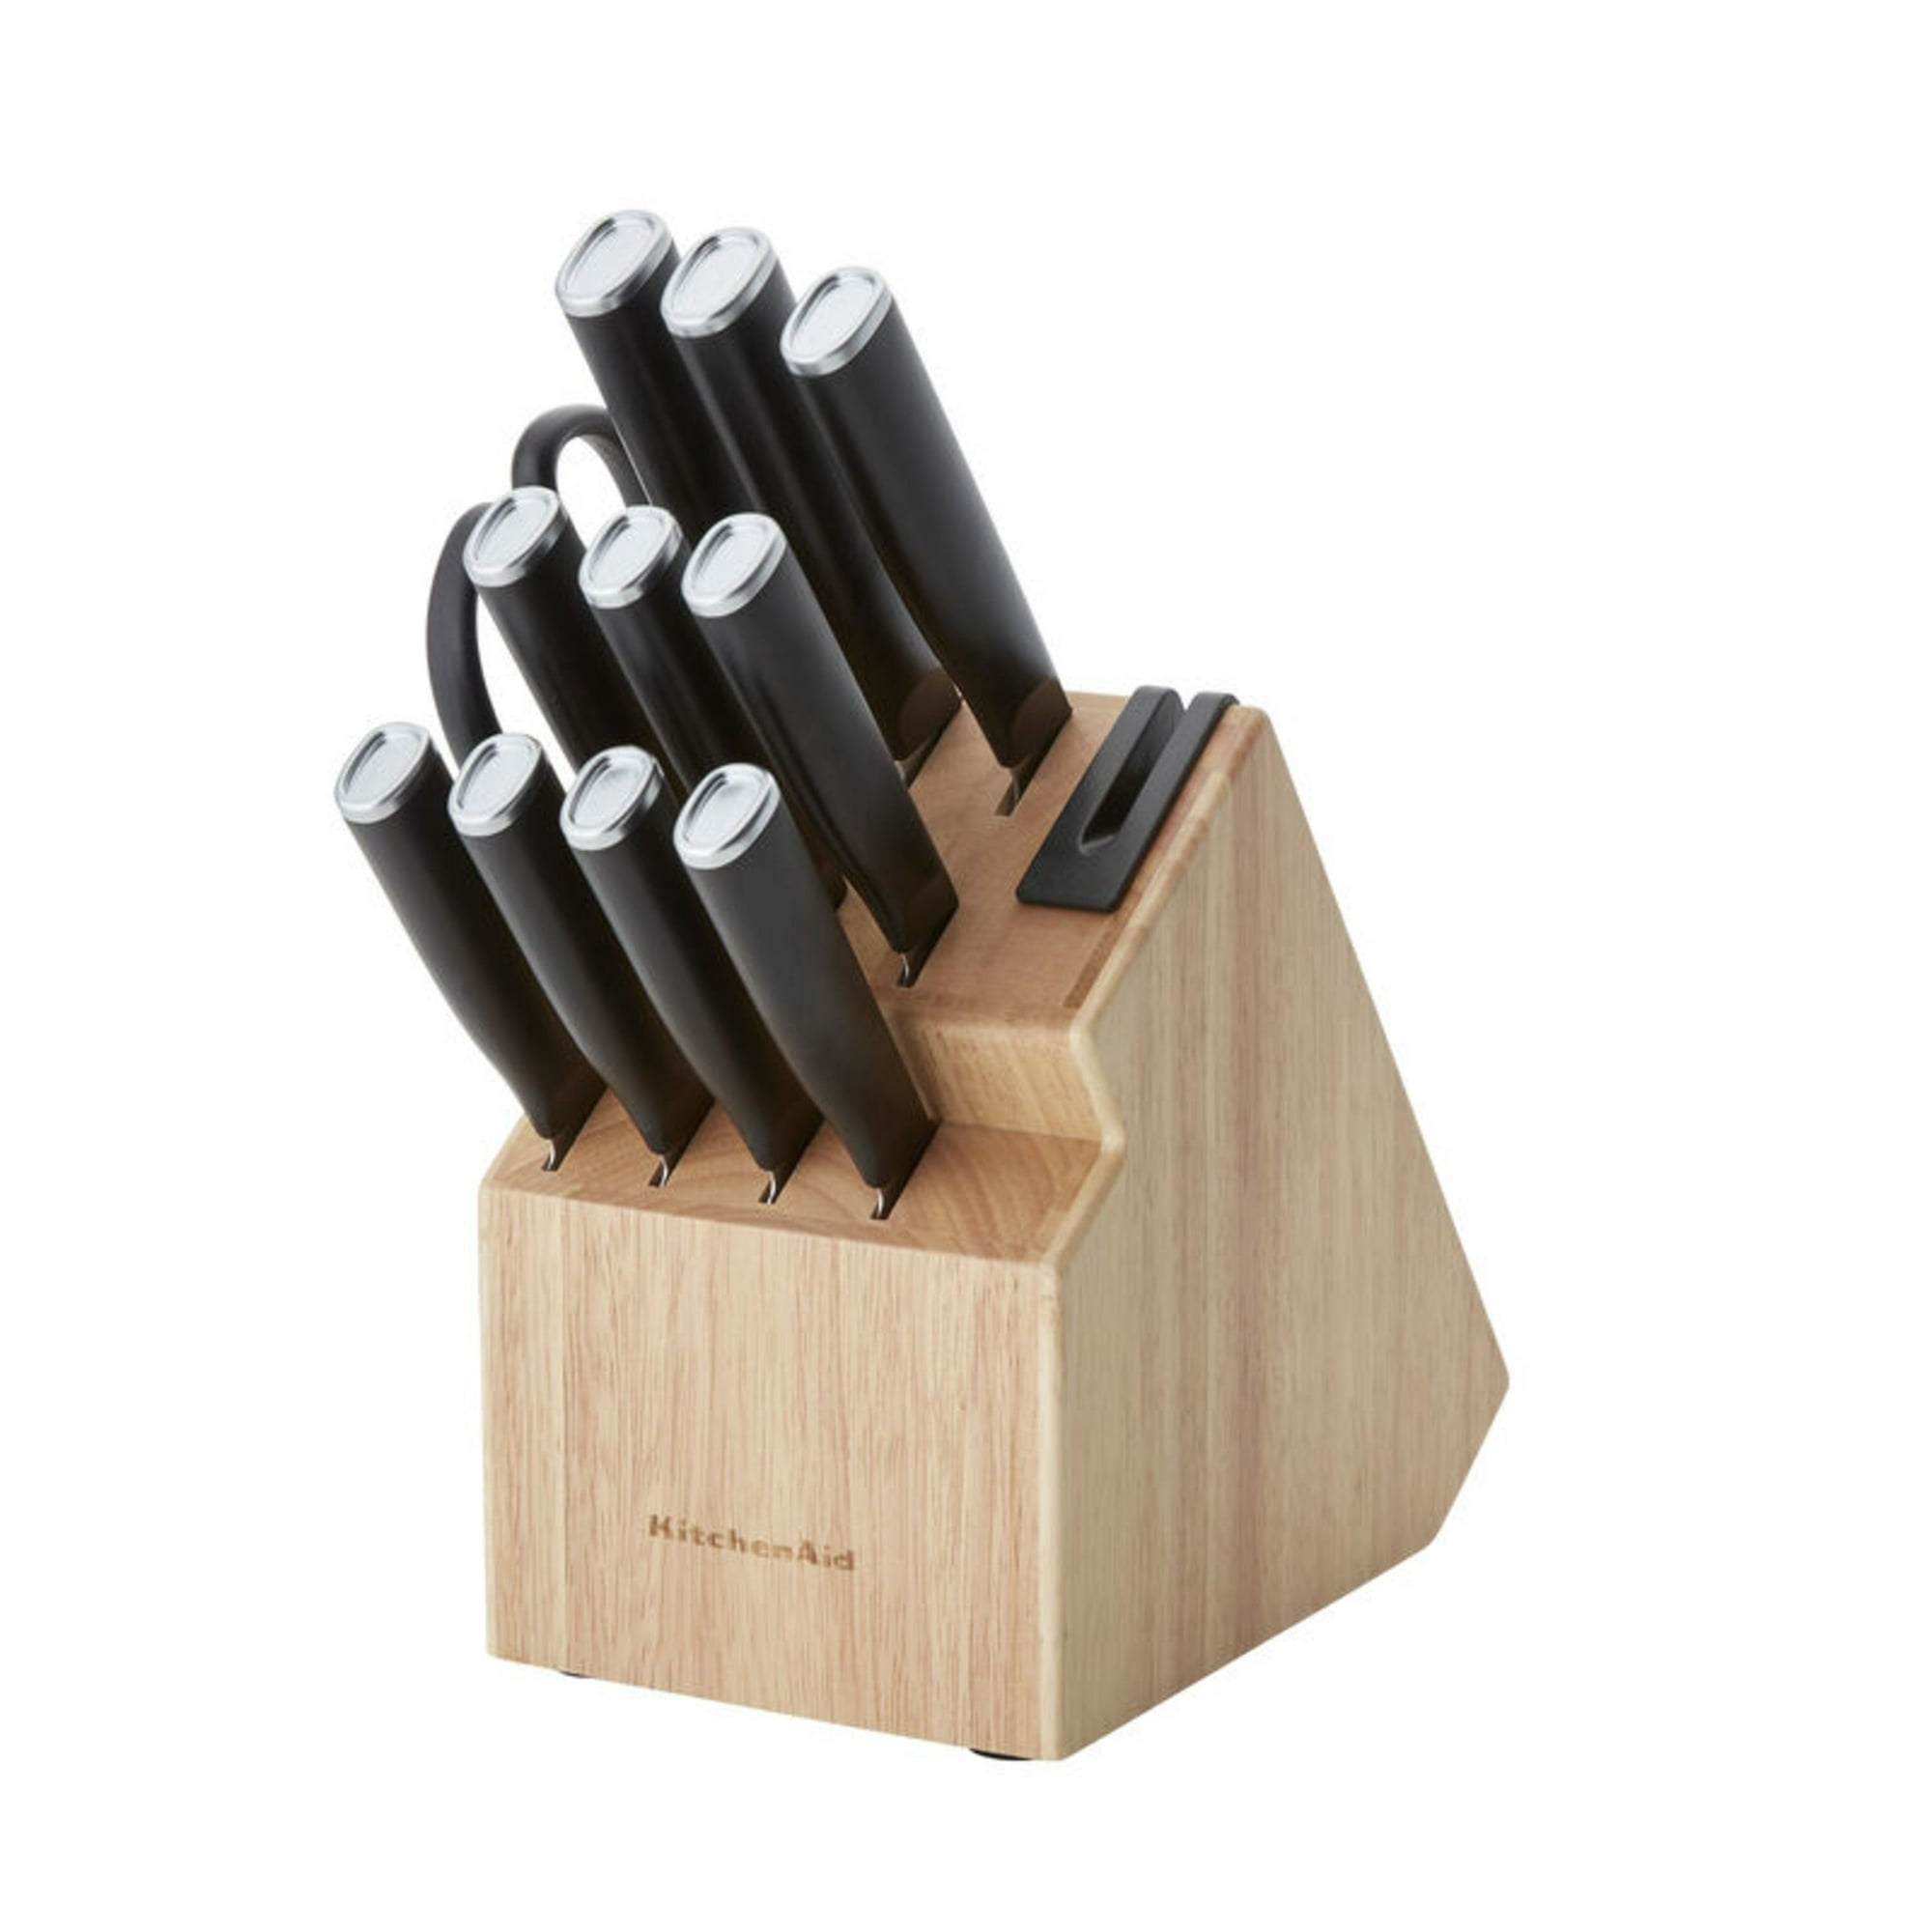 Furi Rachael Ray Gusto Grip Basics 3-Knife Set